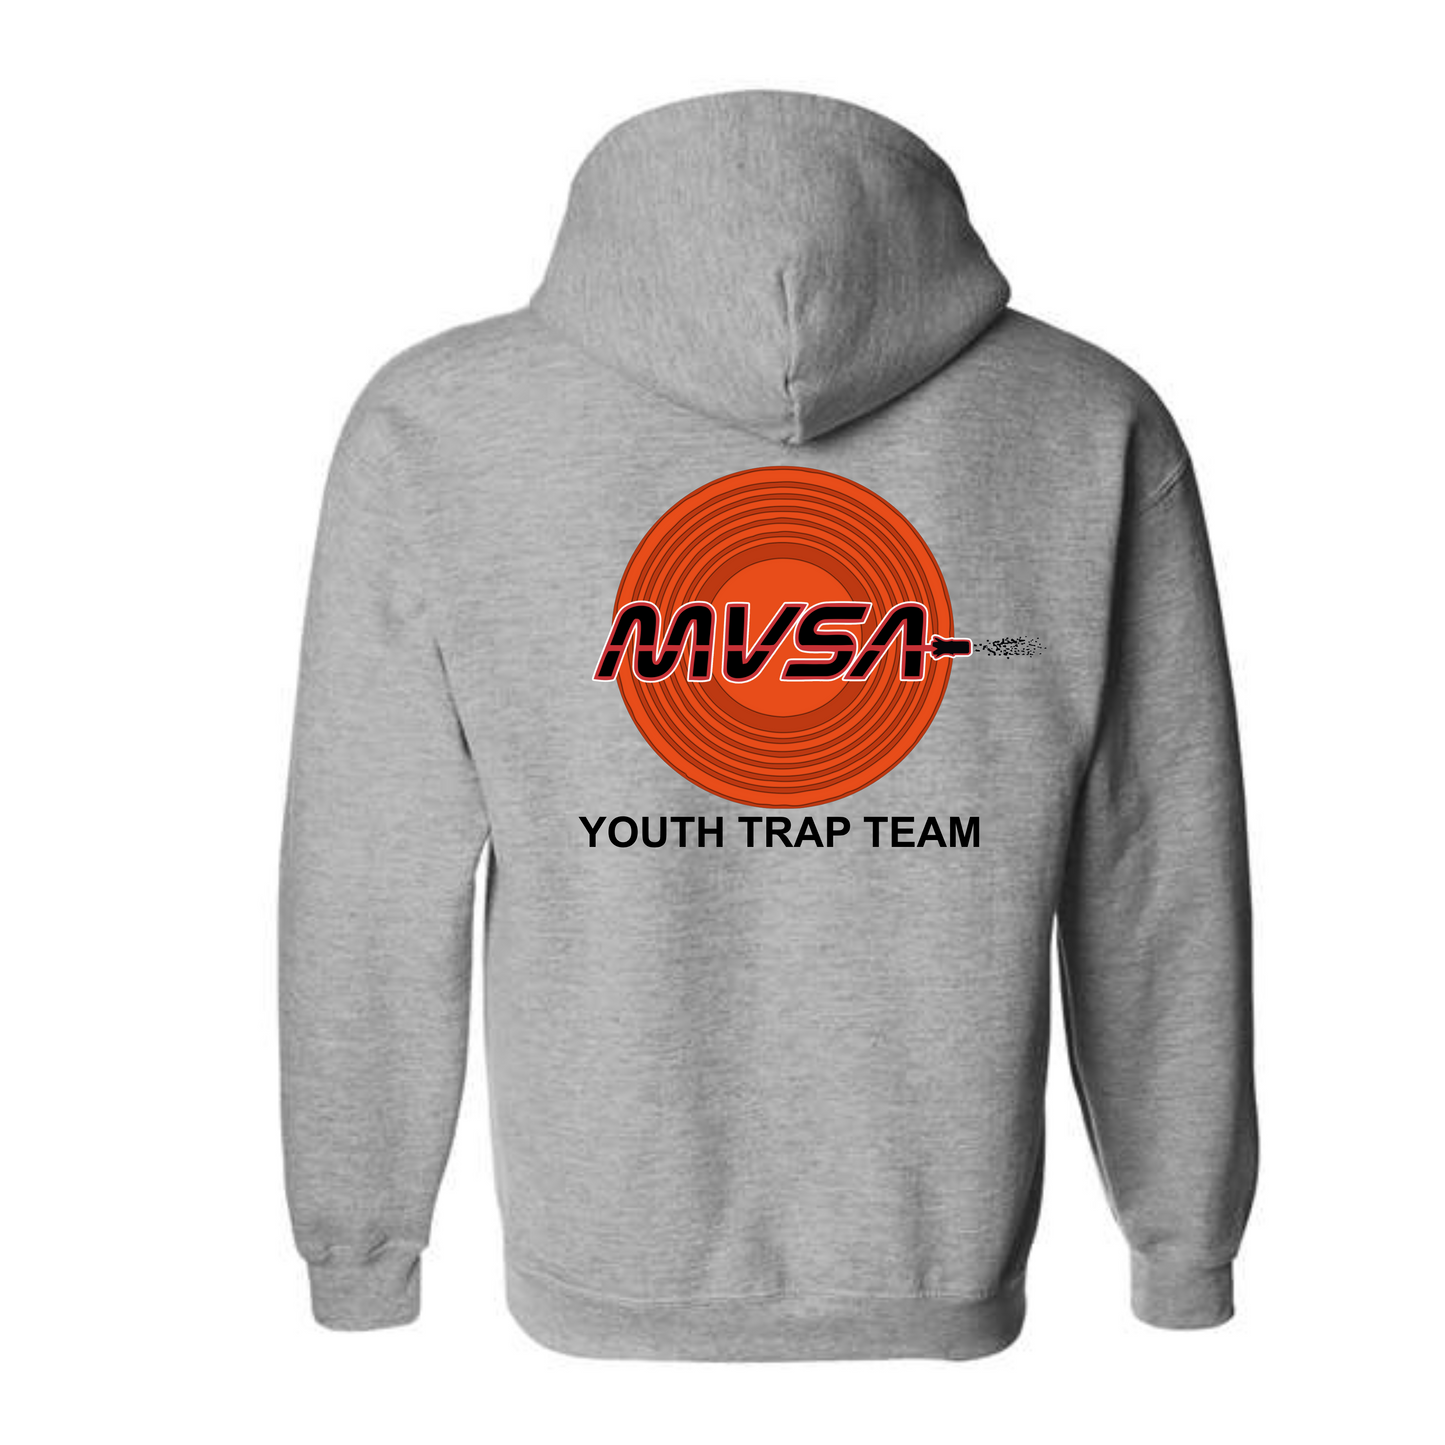 MVSA Youth Trap Team - Grey Hoodie